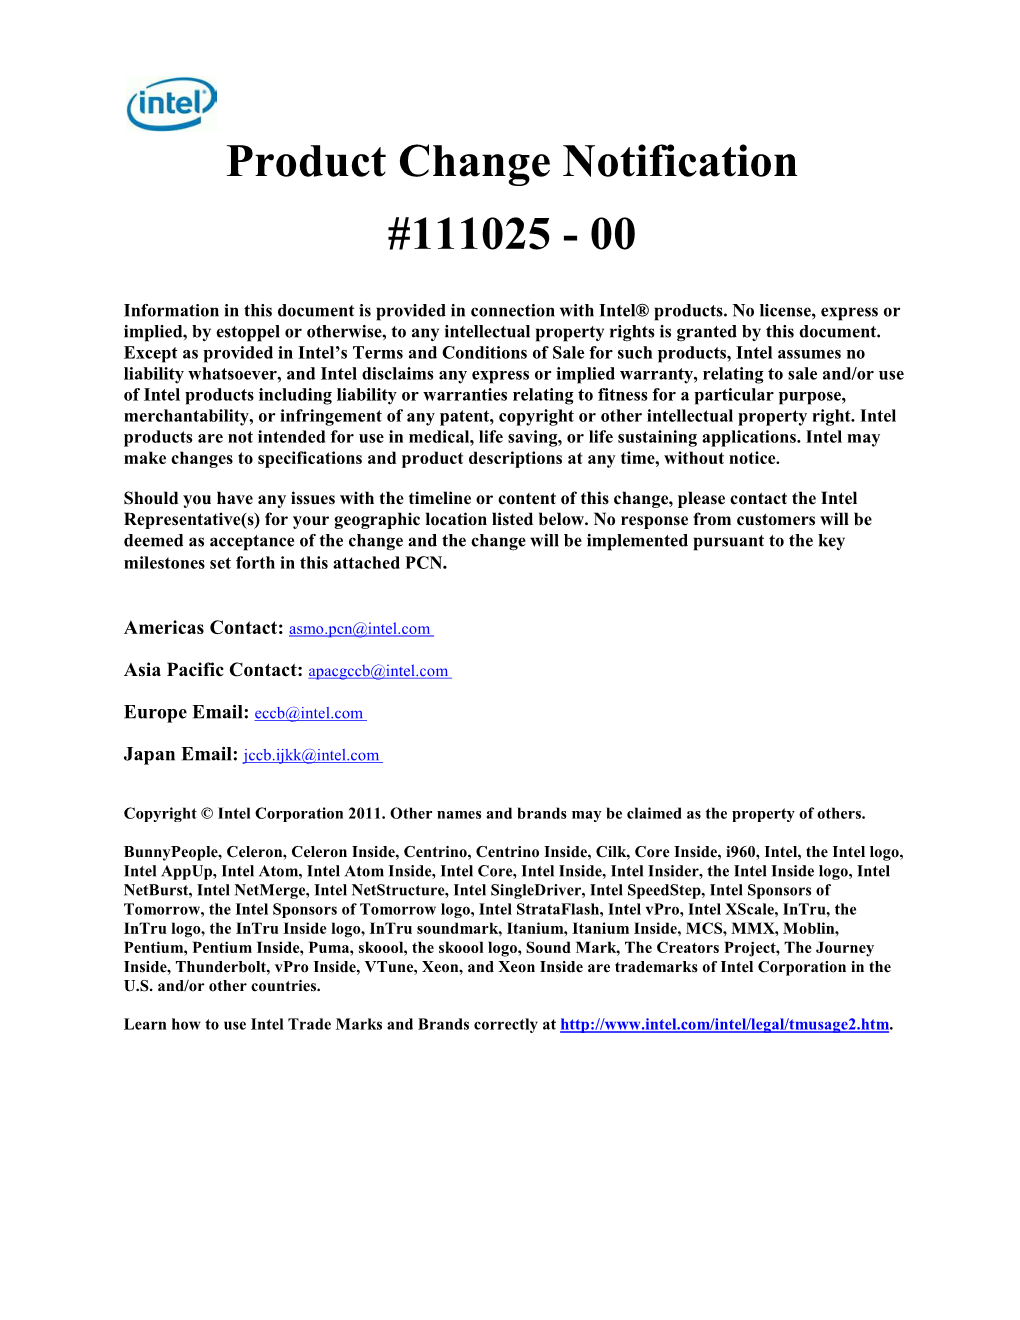 Product Change Notification #111025